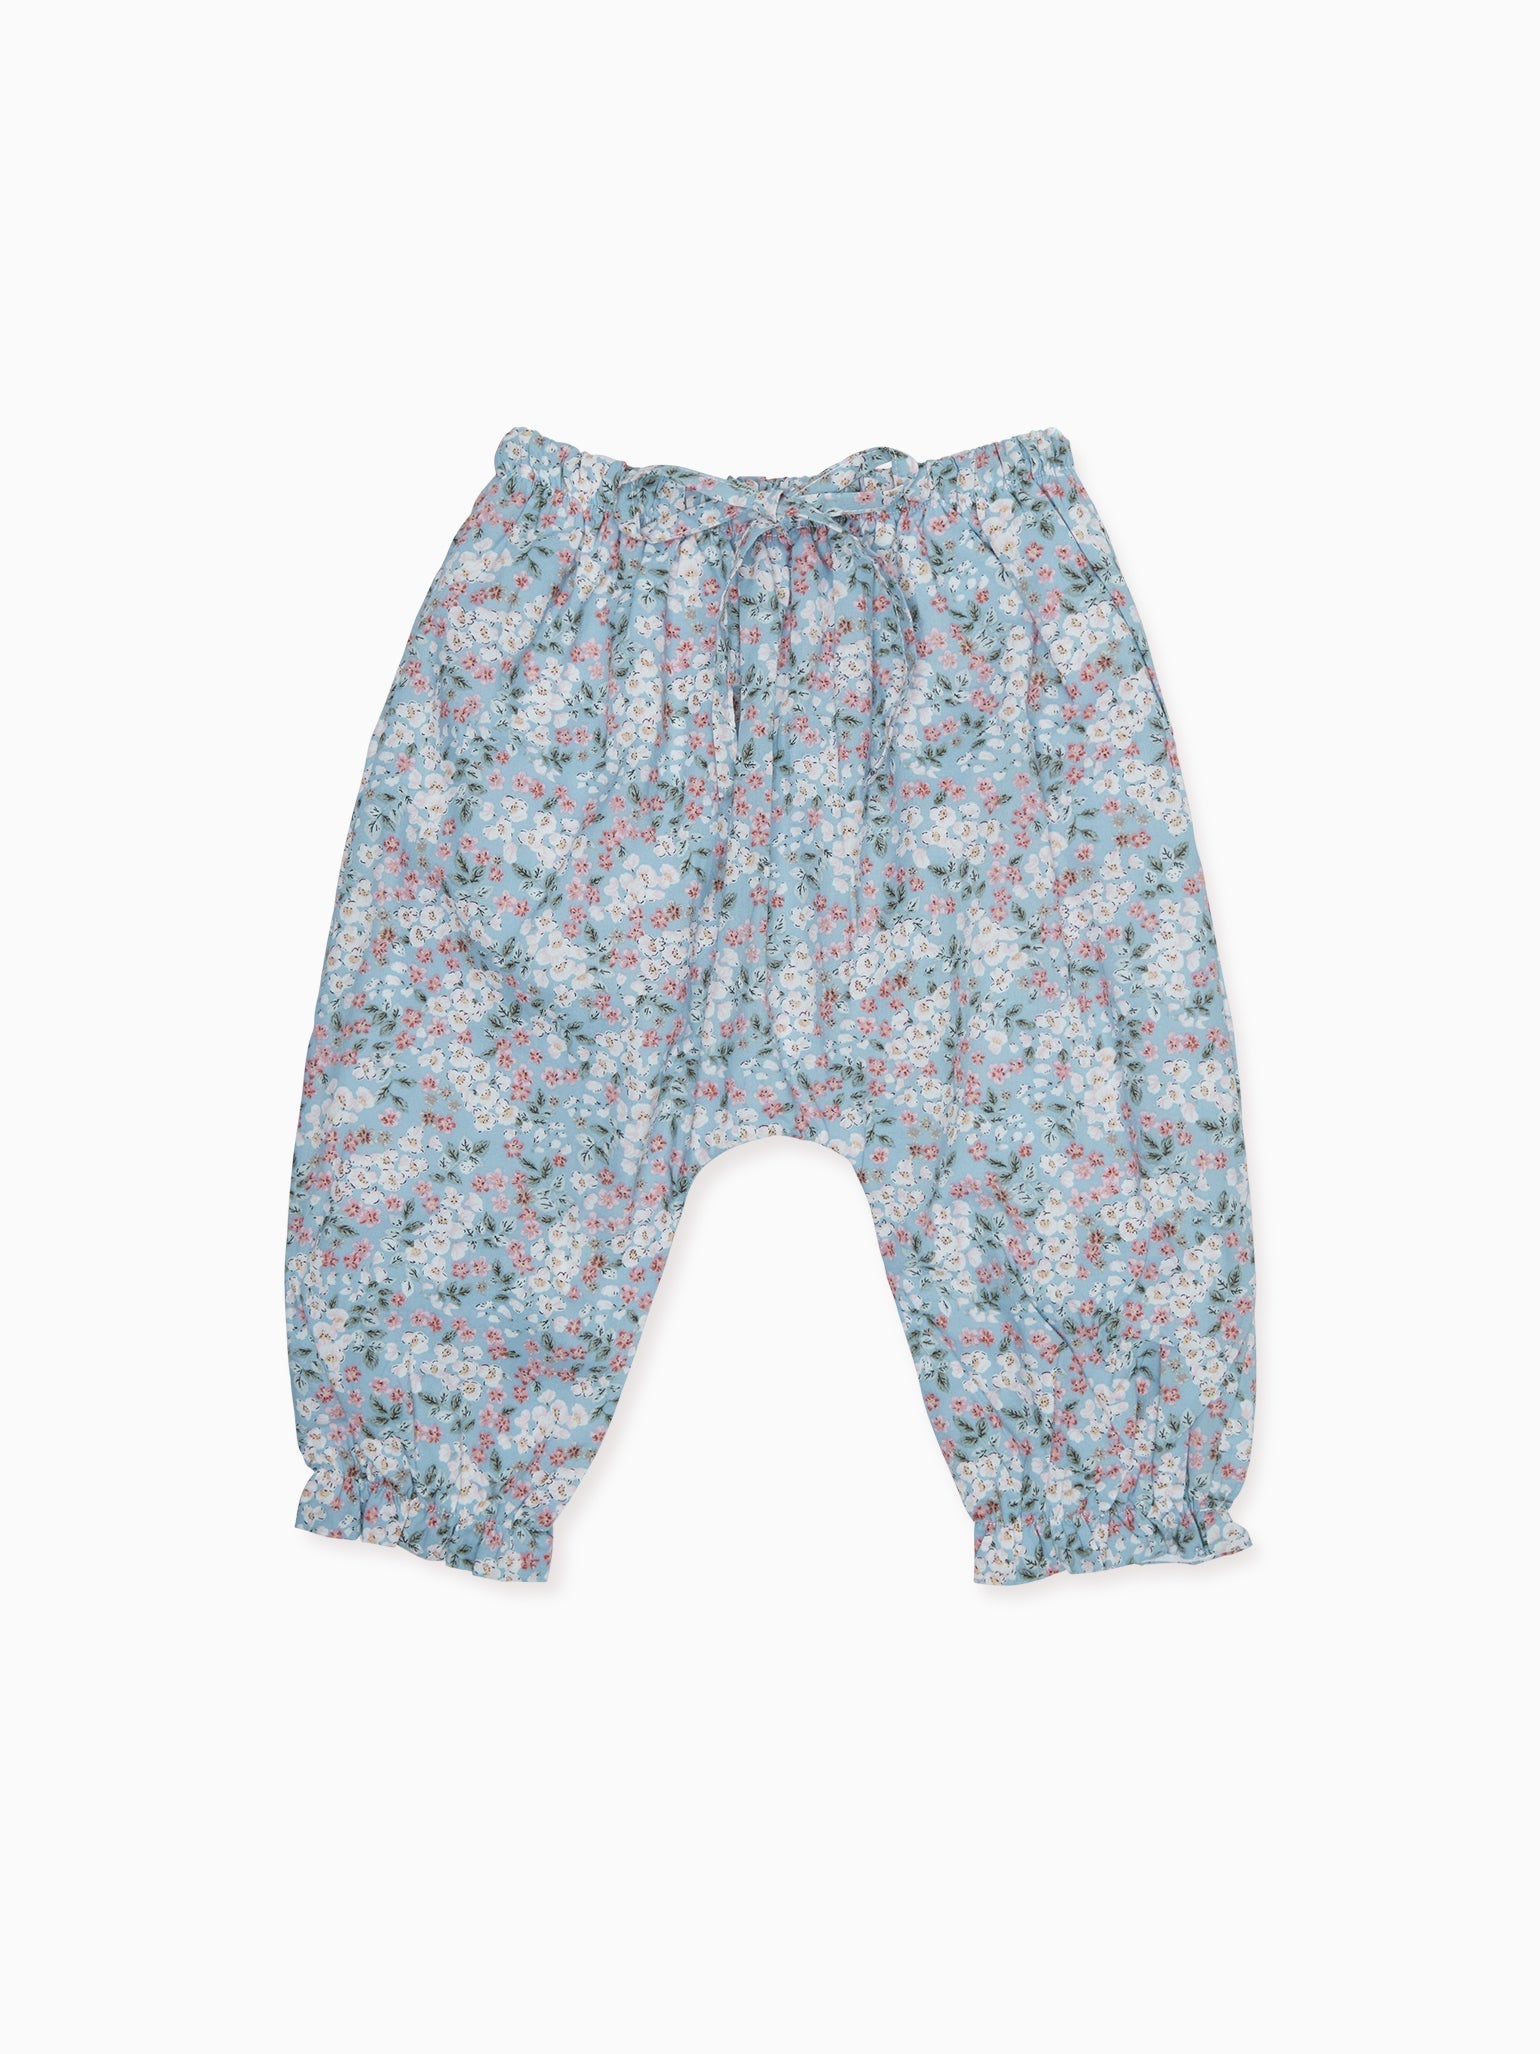 Stylish Baby Girl Summer Trousers. Stock Image - Image of clothing, modern:  114506401